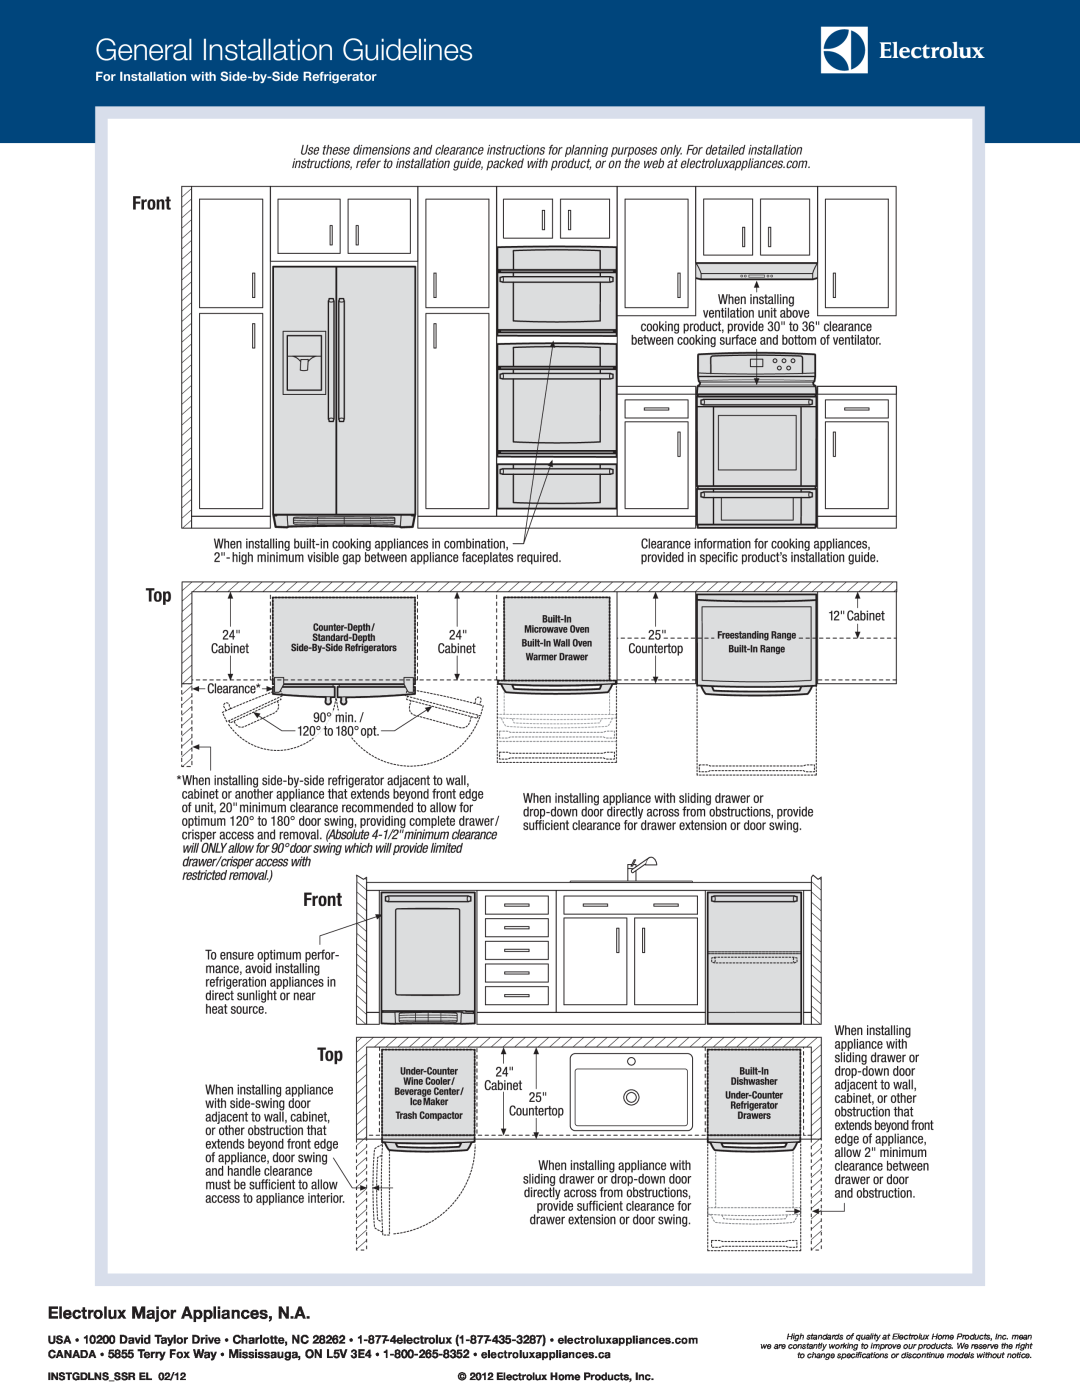 Electrolux EI27EW45JS General Installation Guidelines, Front Top, Electrolux Major Appliances, N.A, INSTGDLNSSSR EL 02/12 